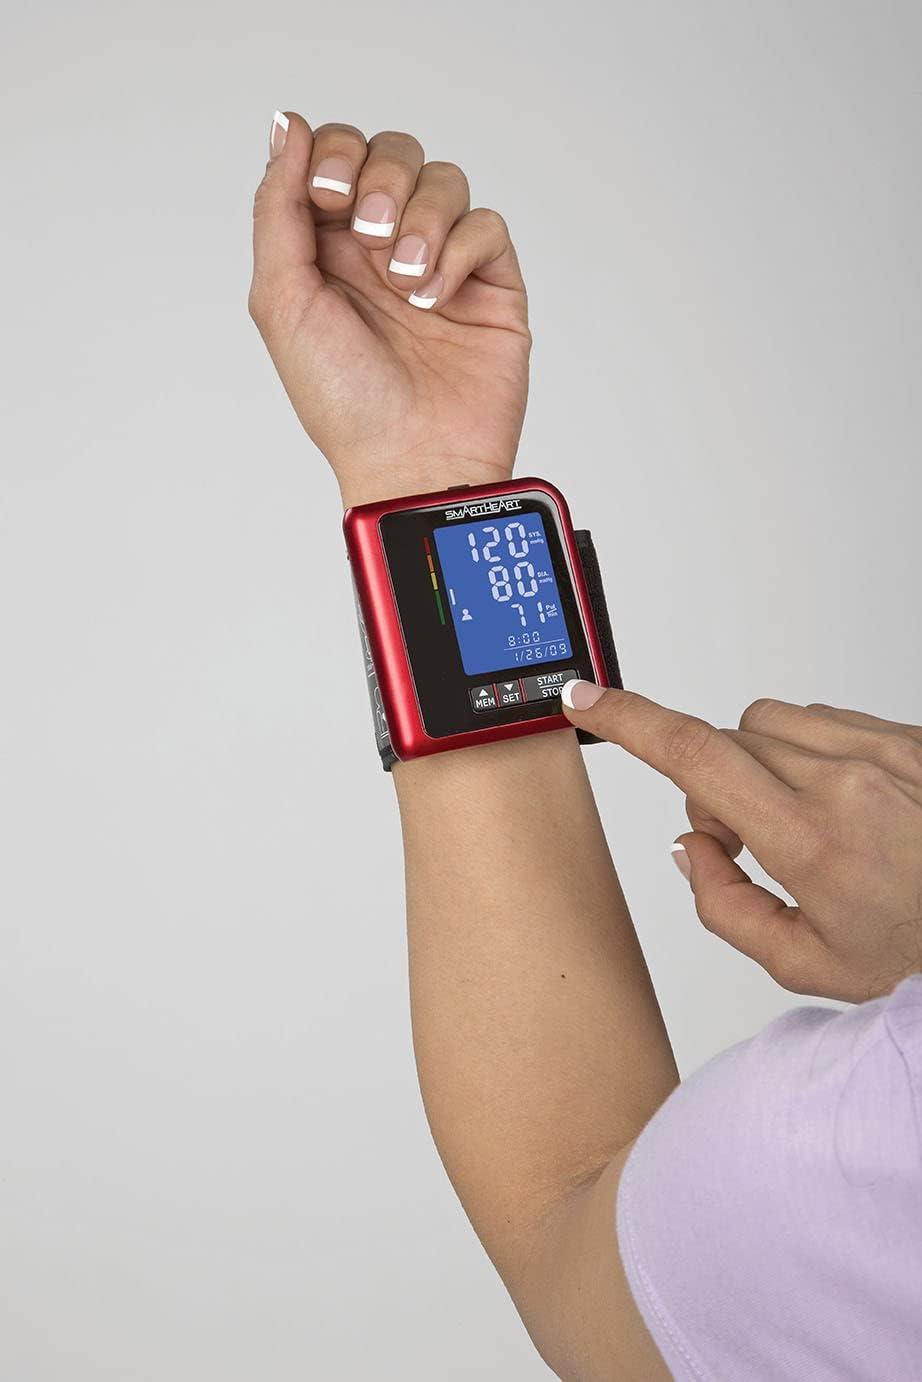 Smartheart Digital Blood Pressure Monitor - Adult Wrist Cuff